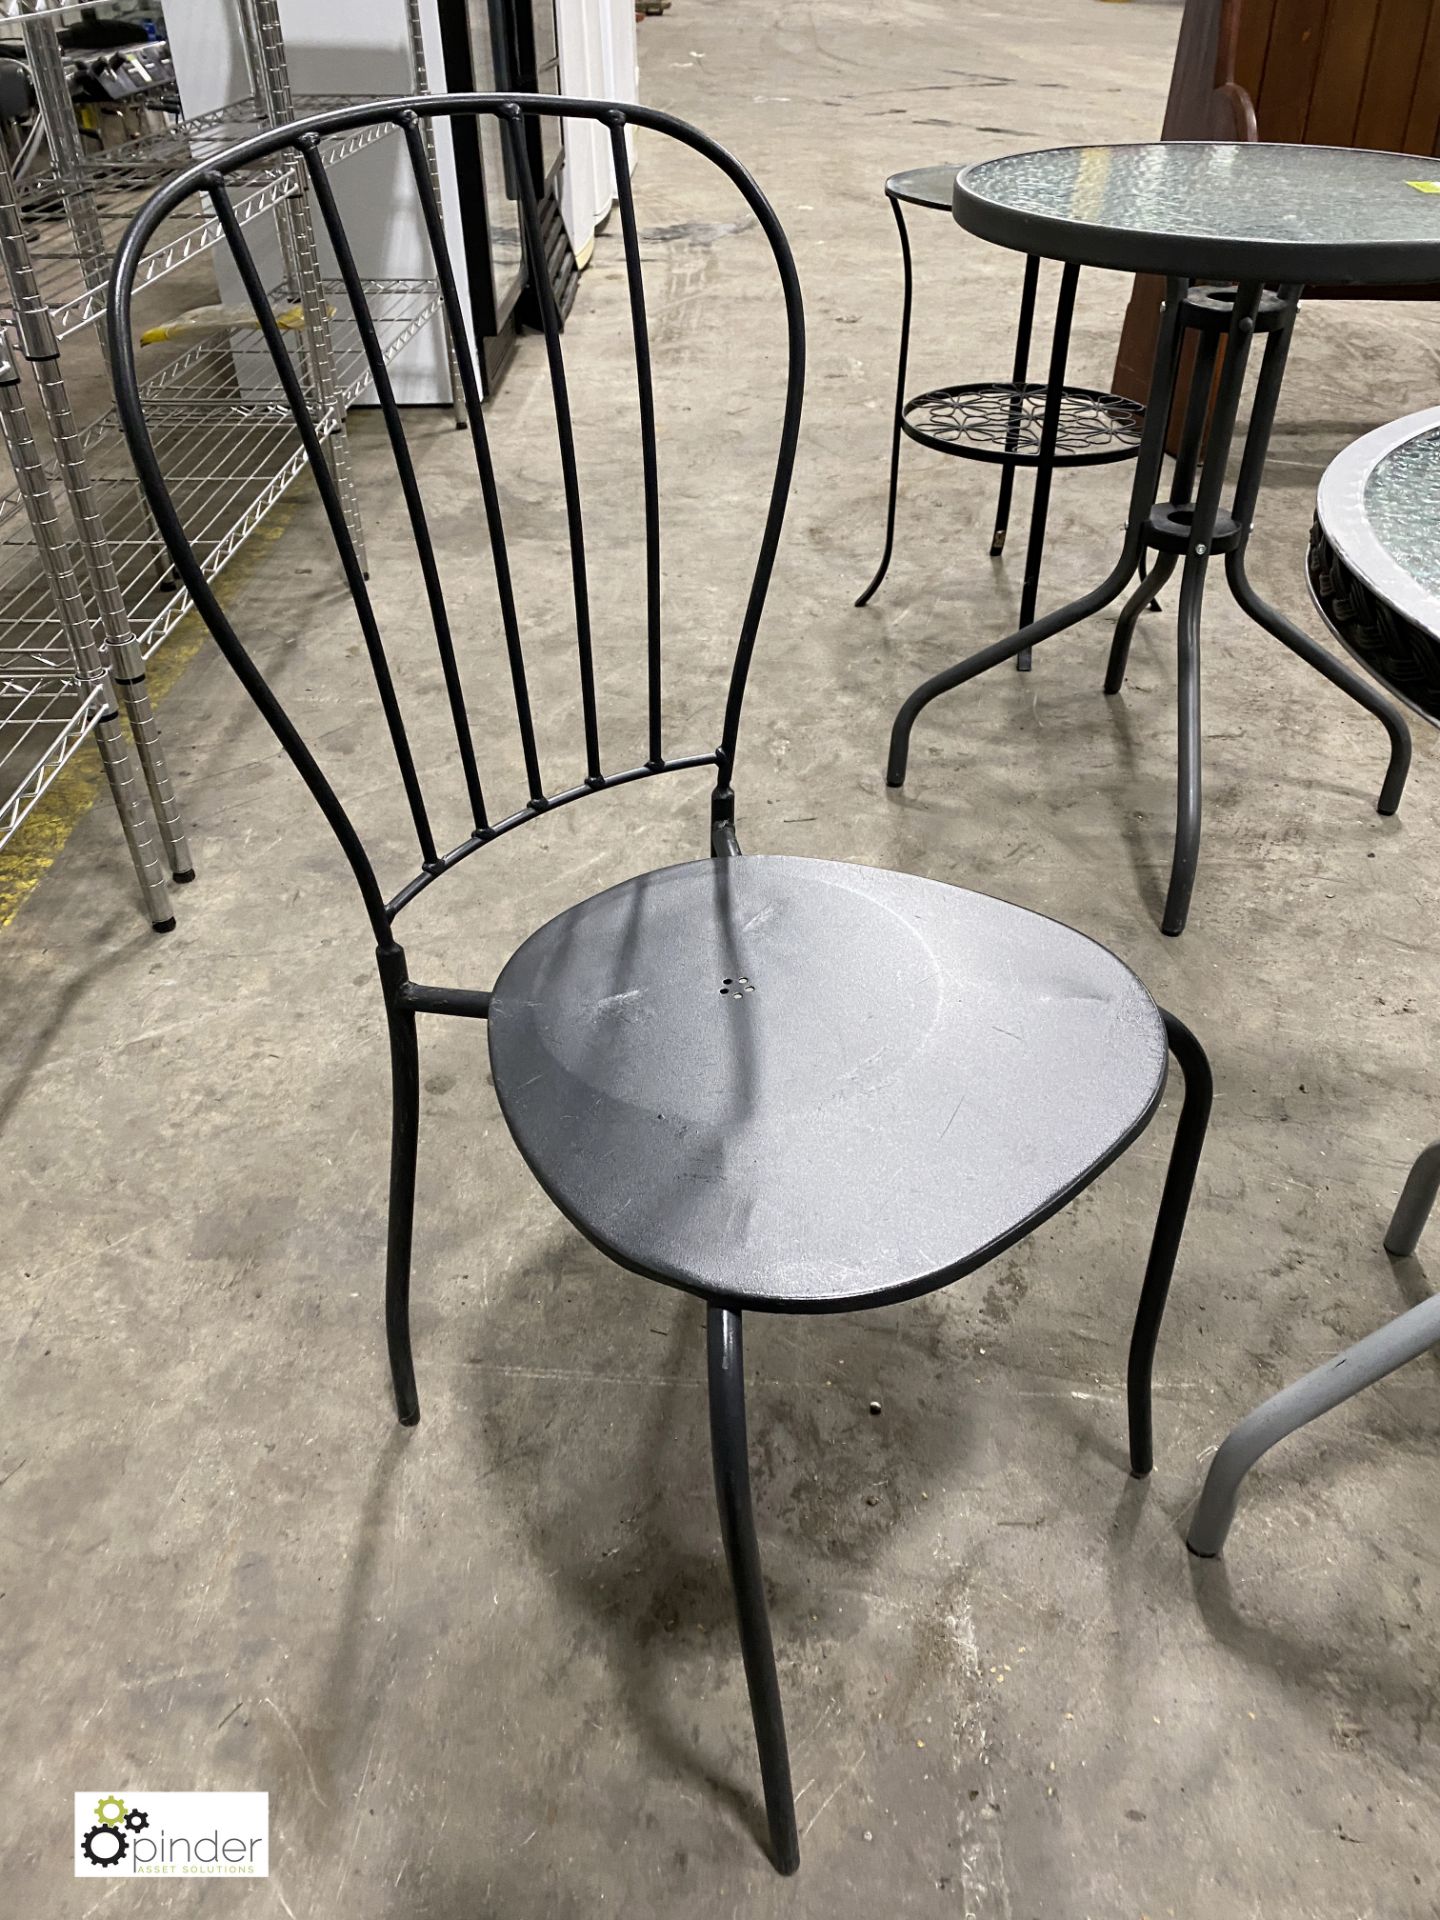 Glass top circular Café Table, 620mm diameter, with 2 tubular café chairs - Image 3 of 4